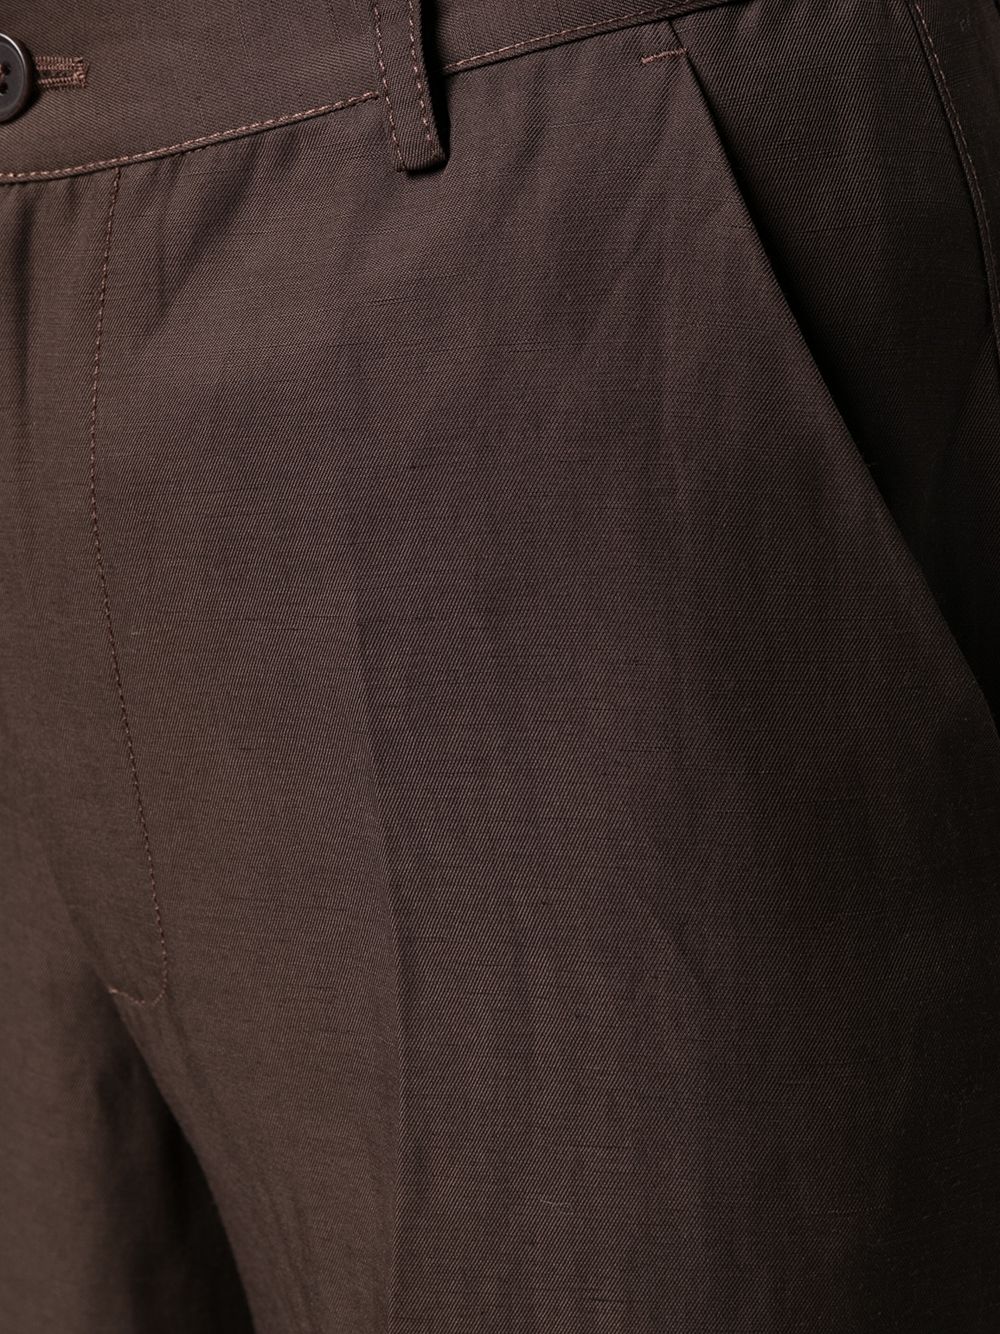 фото P.a.r.o.s.h. широкие брюки строгого кроя